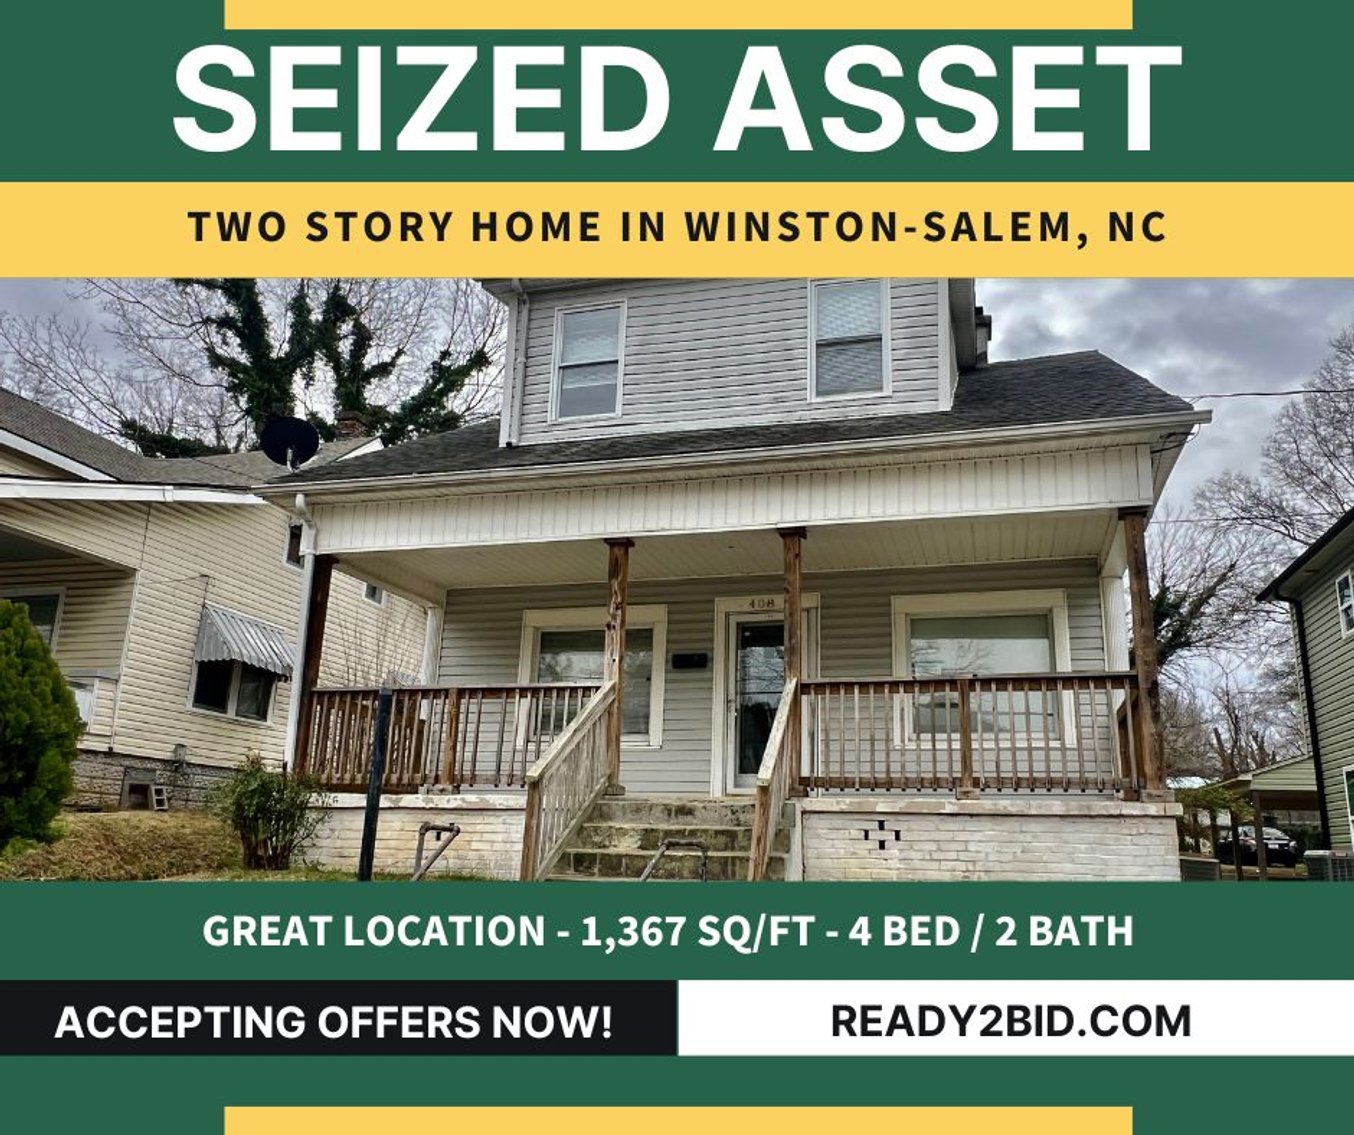 SEIZED ASSET: Charming Home in Winston-Salem, NC